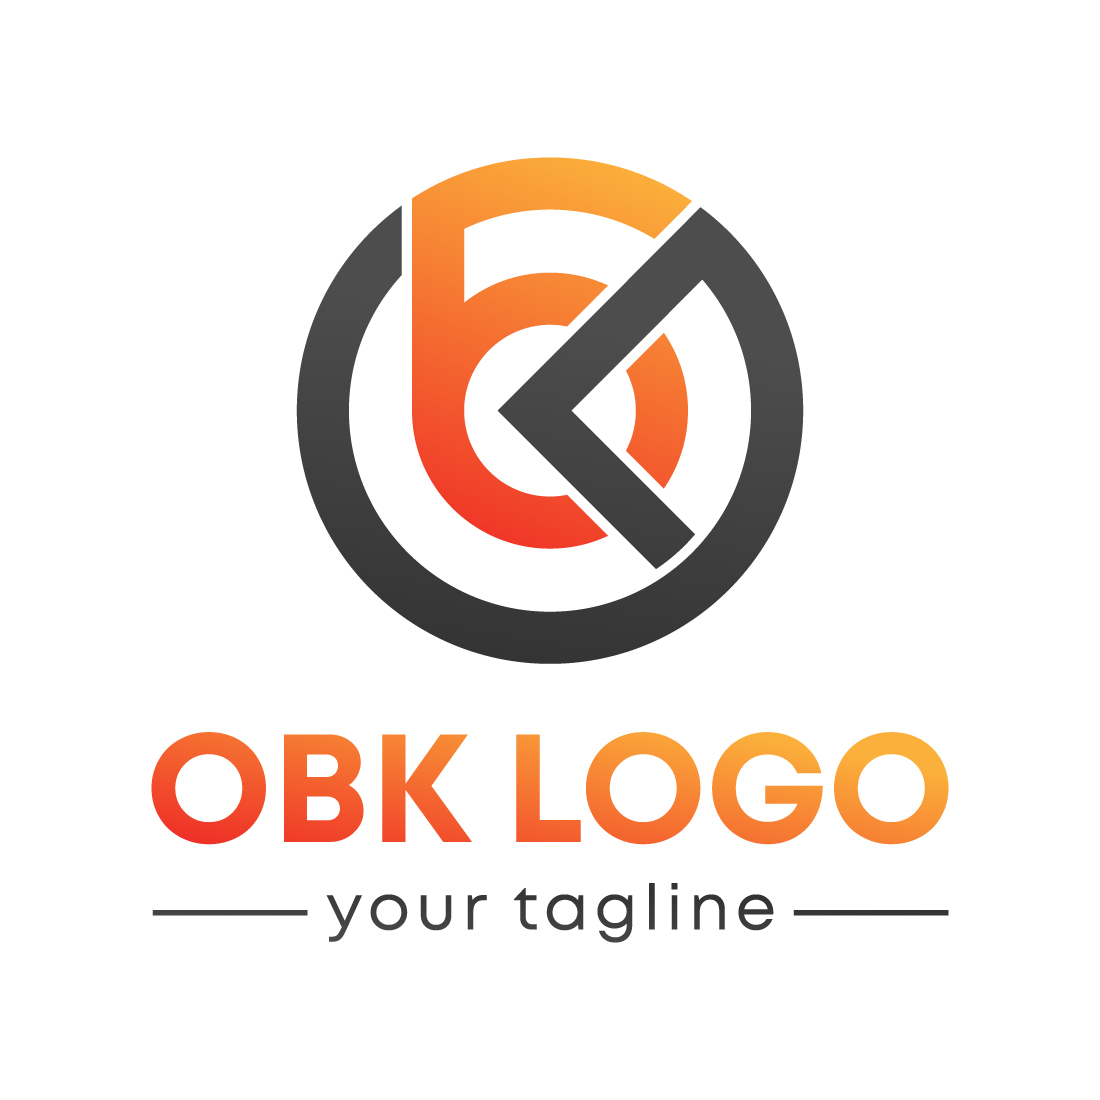 OBK logo Design preview image.